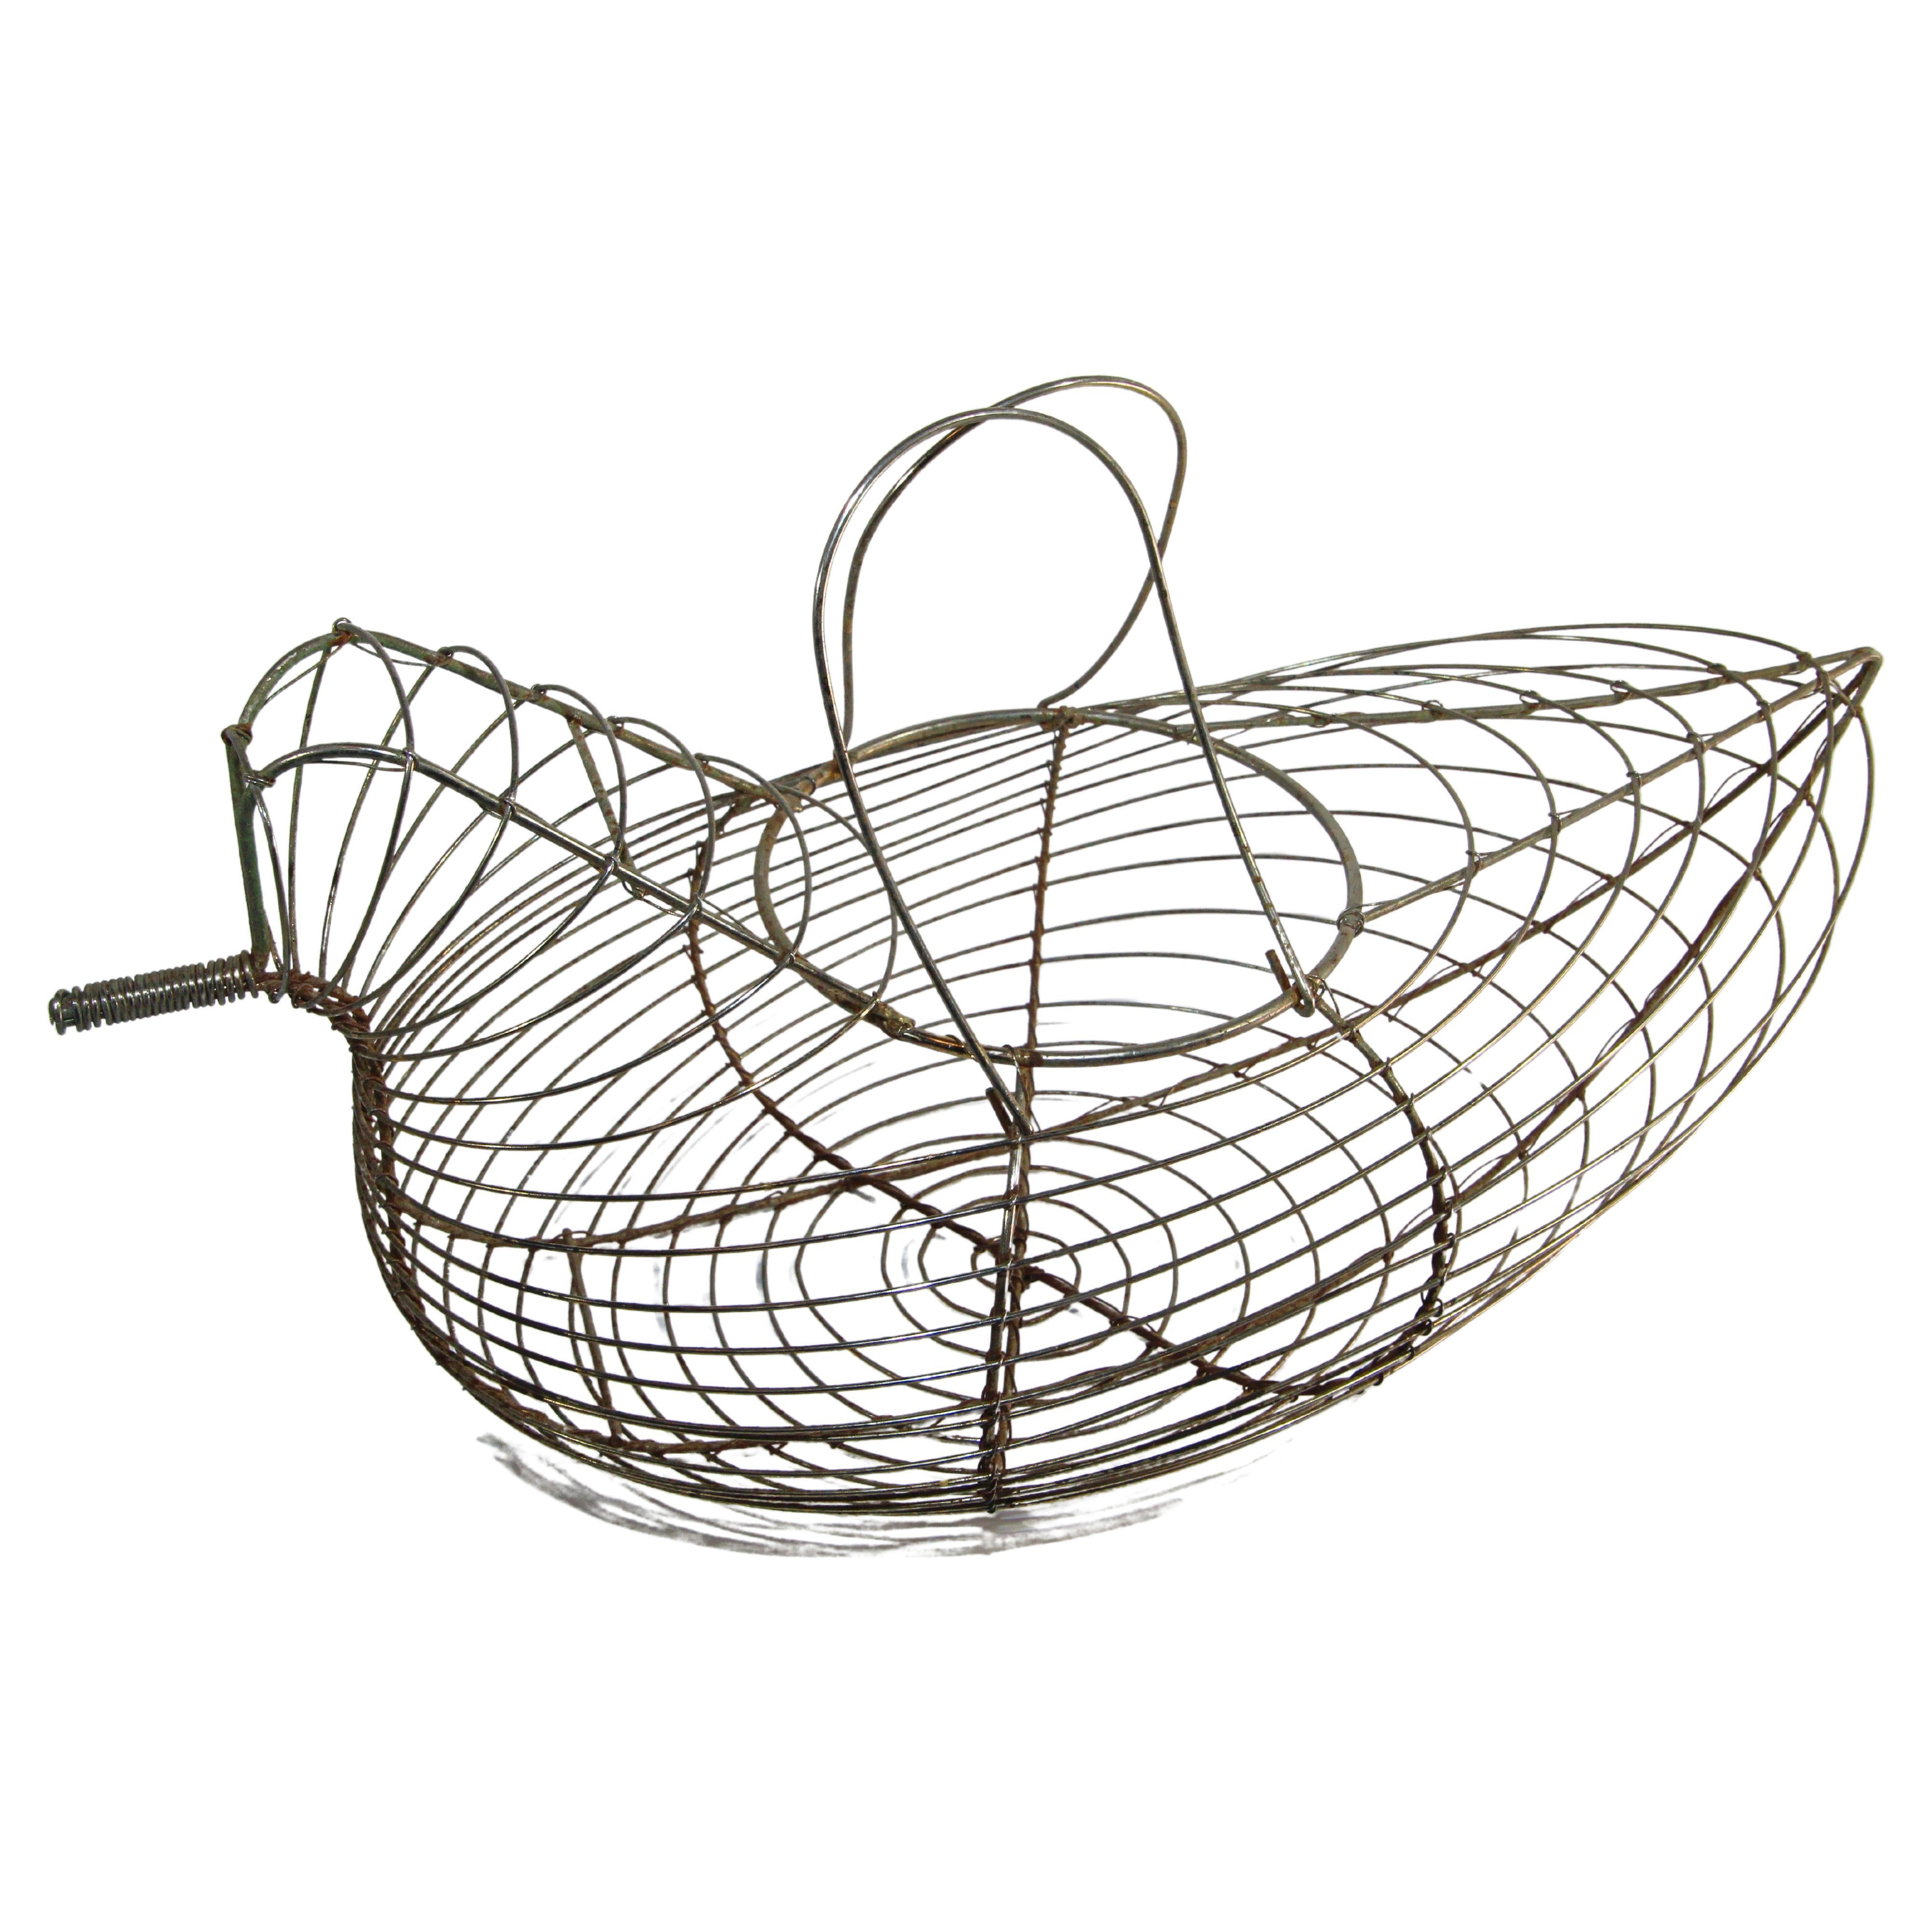 Vintage French Wire Hen Shaped Egg Basket